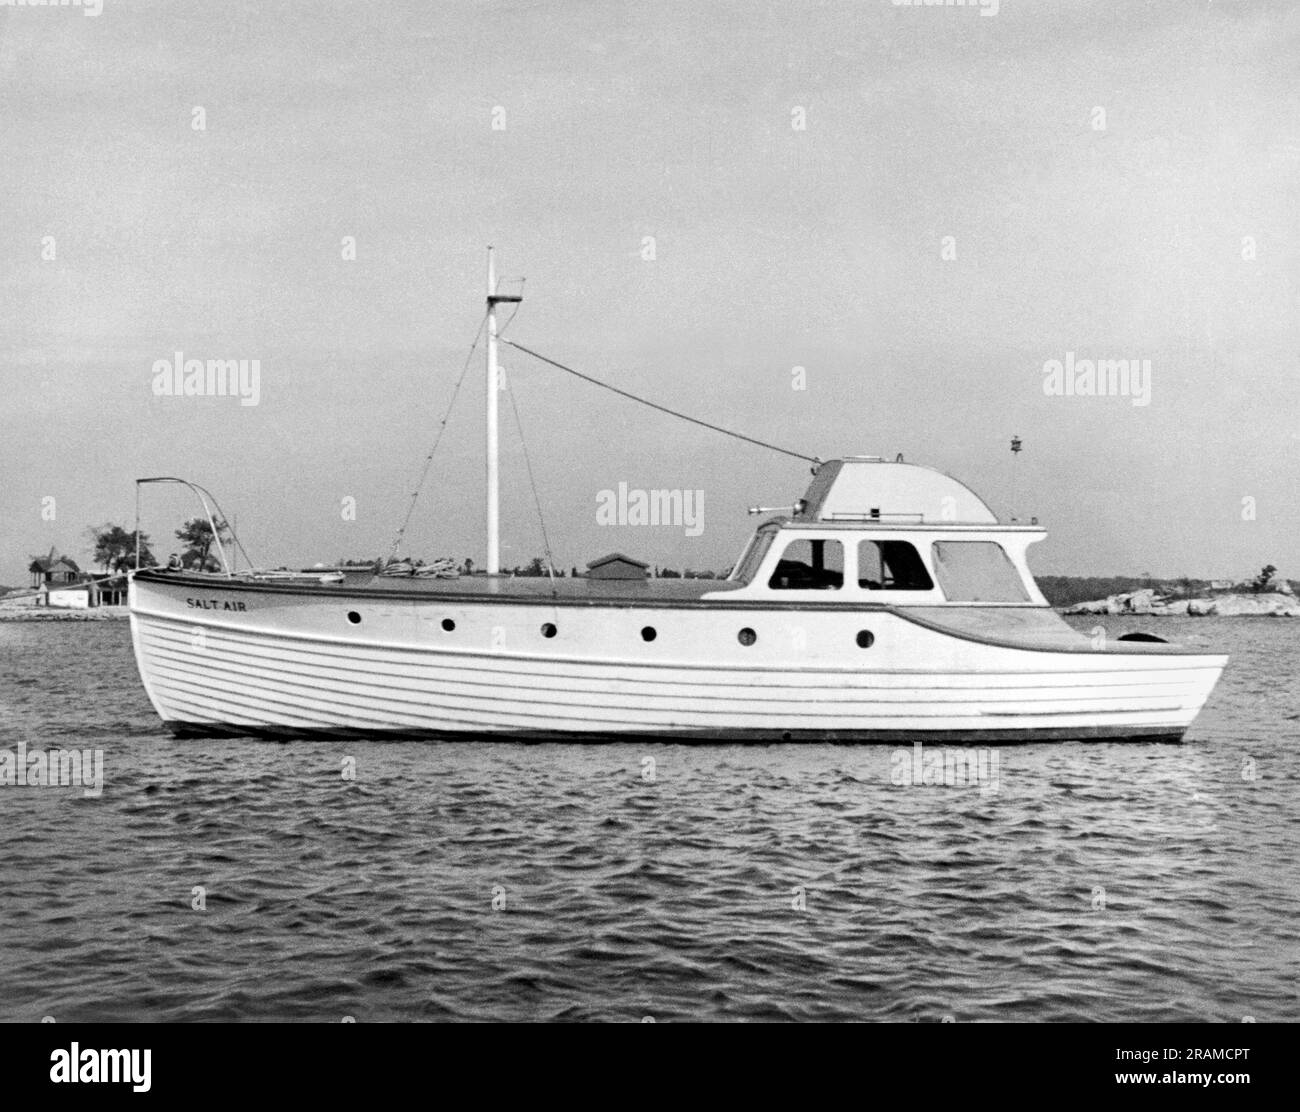 Vereinigte Staaten: c. 1935. Das Motorboot "Salt Air" vor Anker. Stockfoto